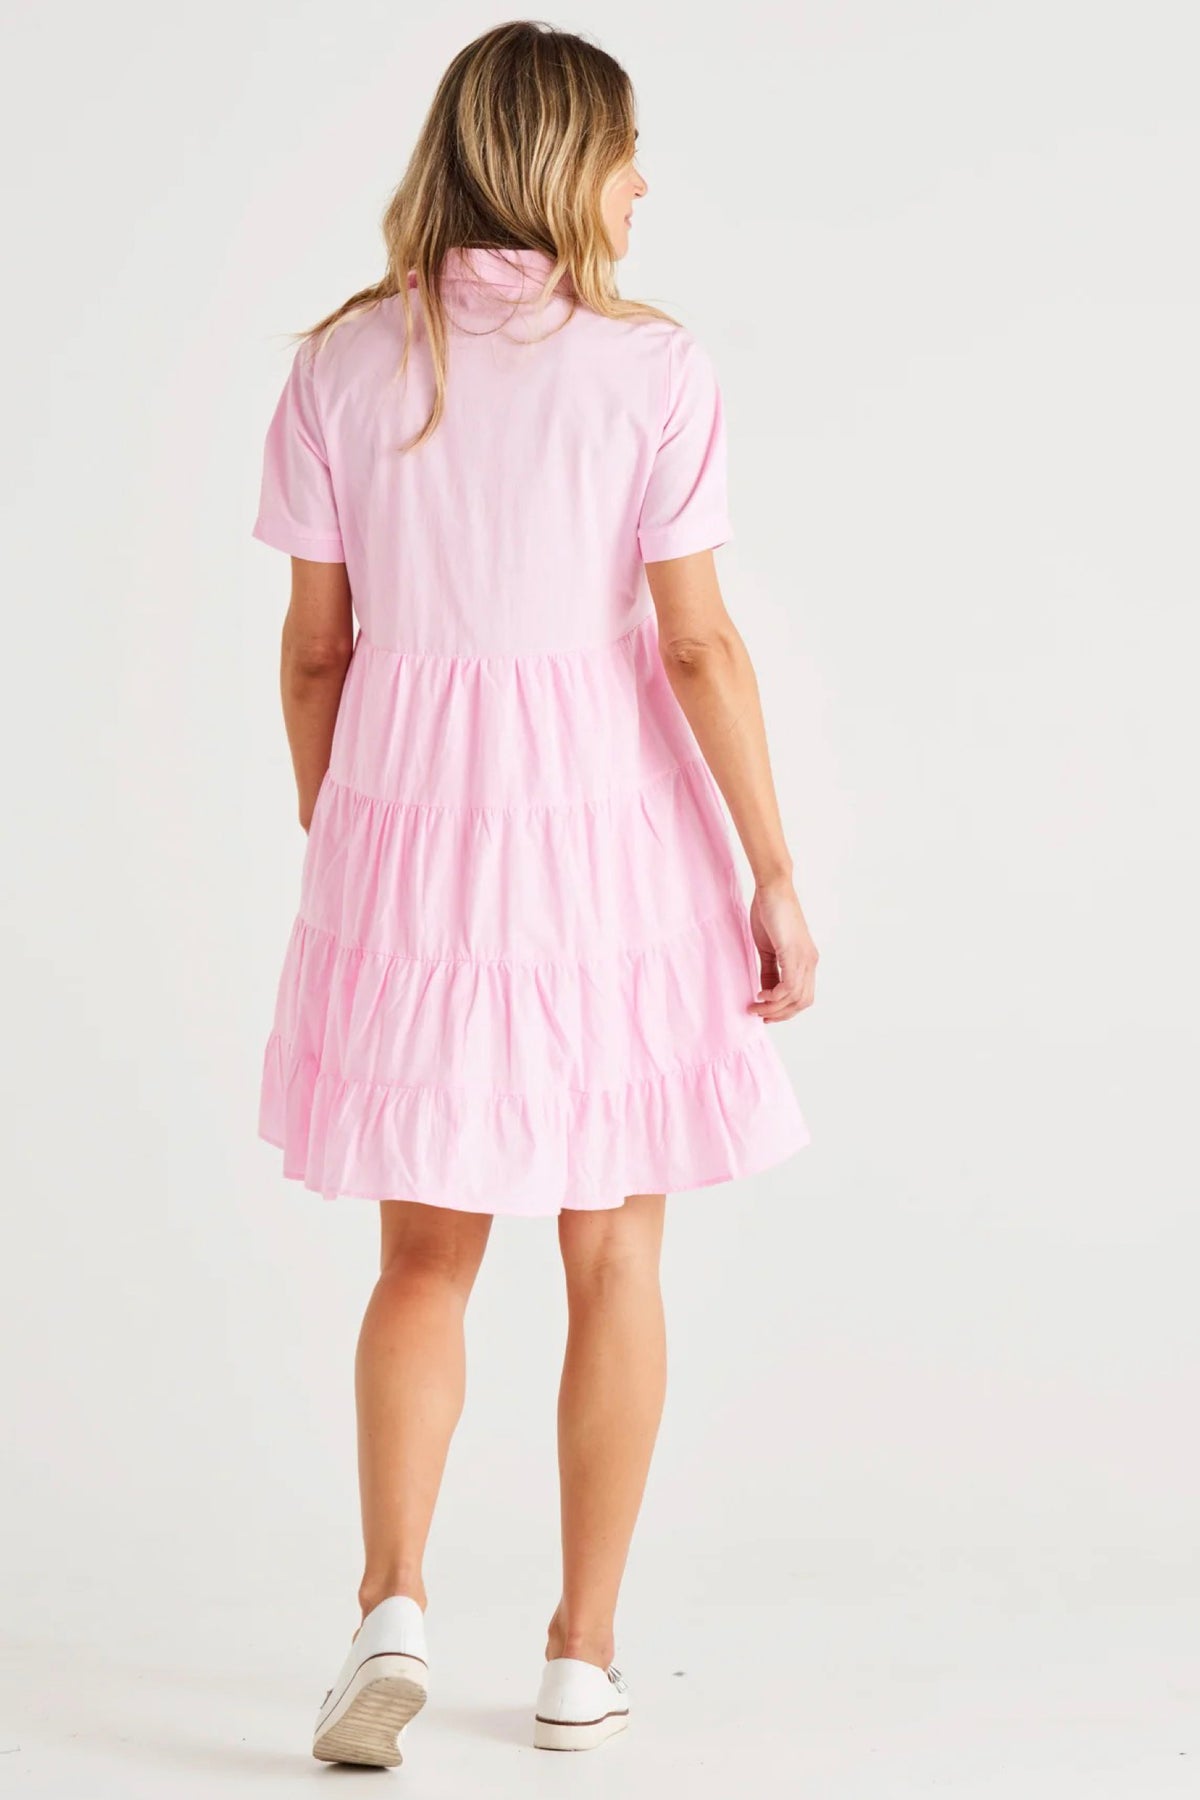 Estelle Dress Blush Pink